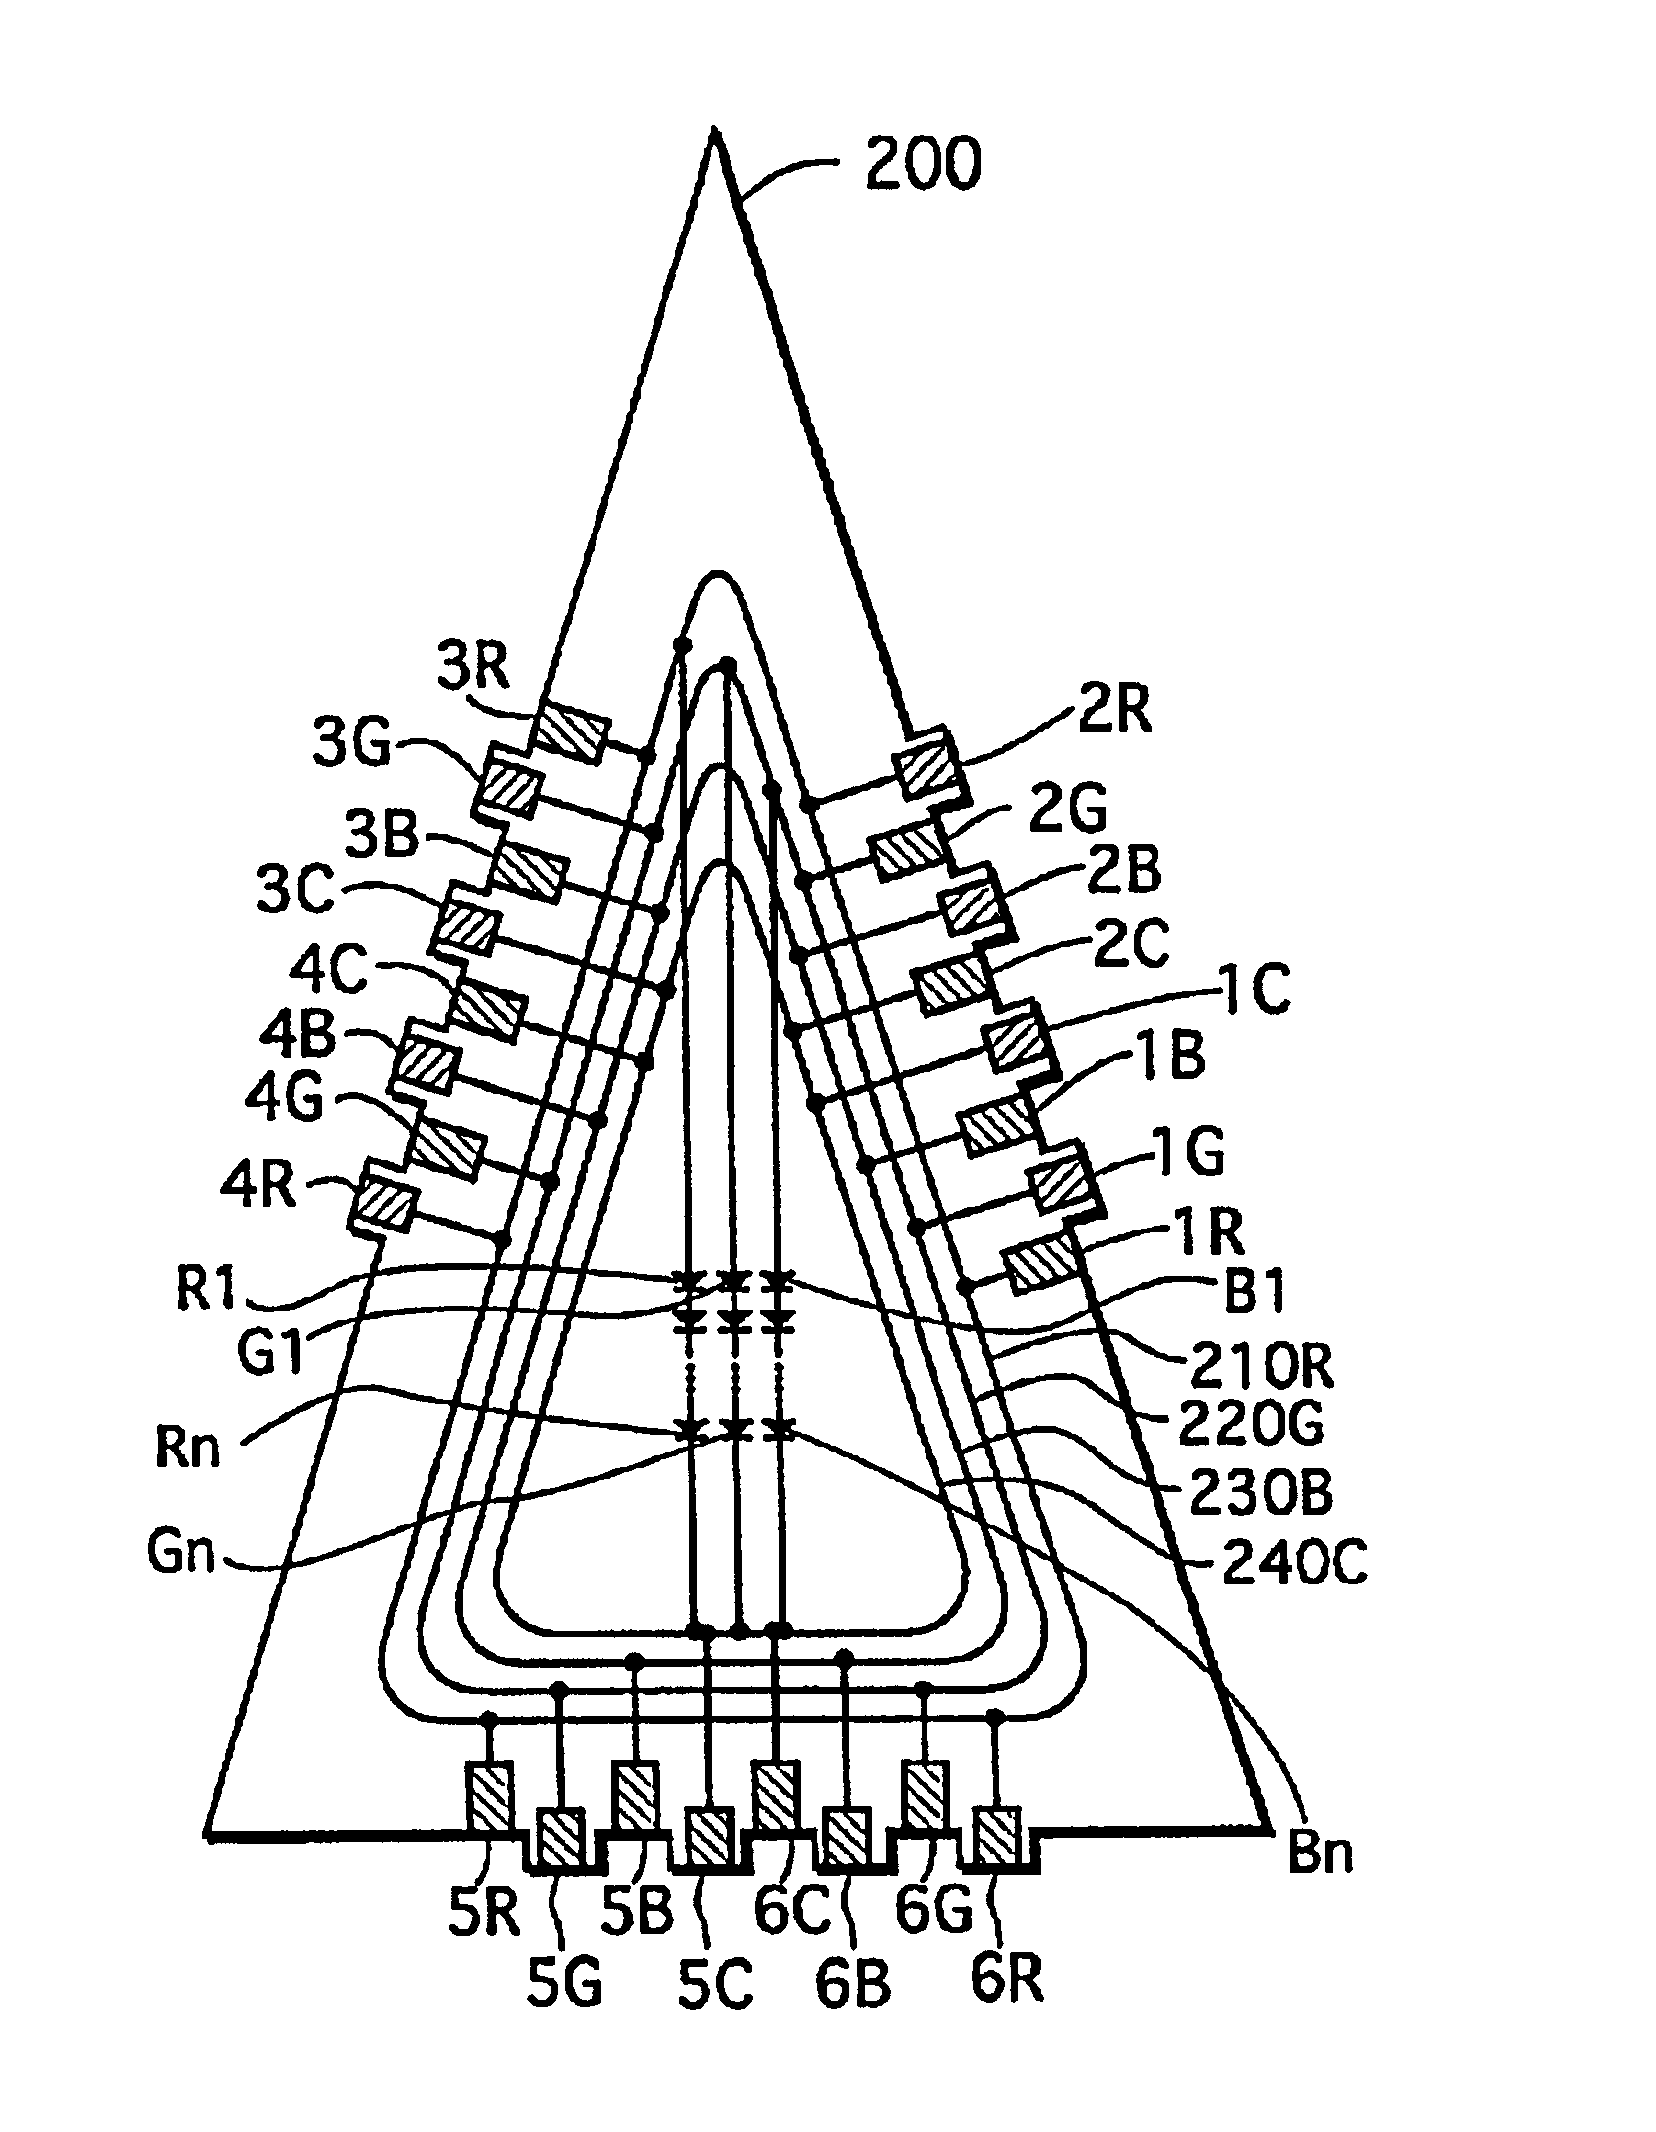 Light-emitting unit, light-emitting unit assembly, and lighting apparatus produced using a plurality of light-emitting units